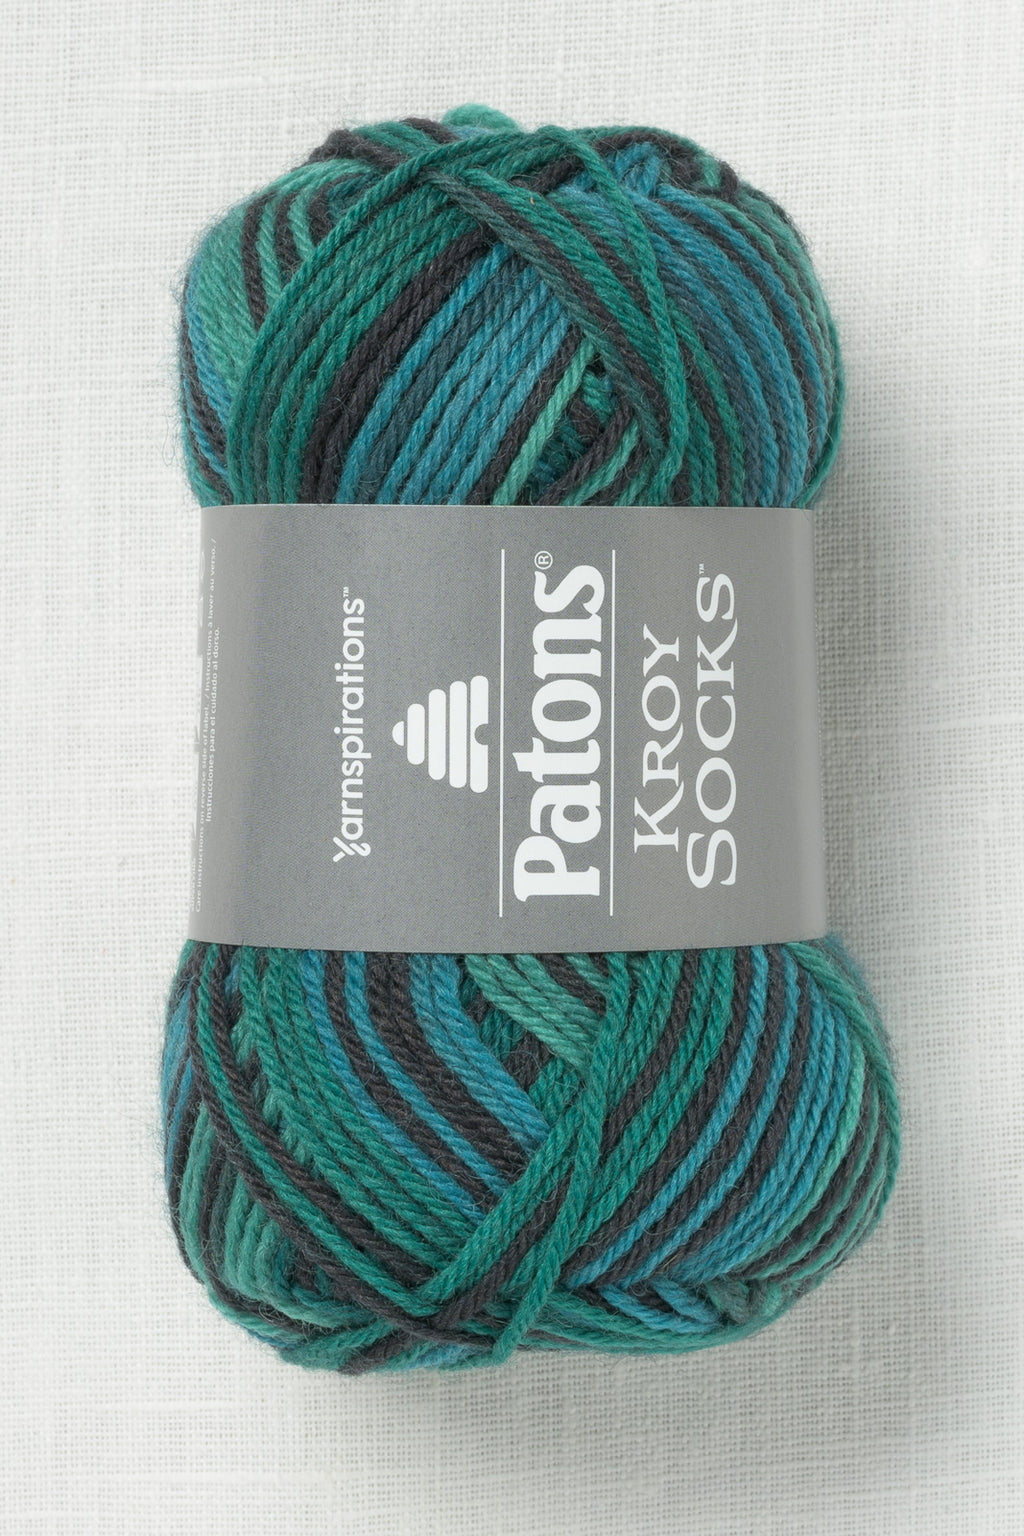 Patons Kroy Socks Turquoise Stripes